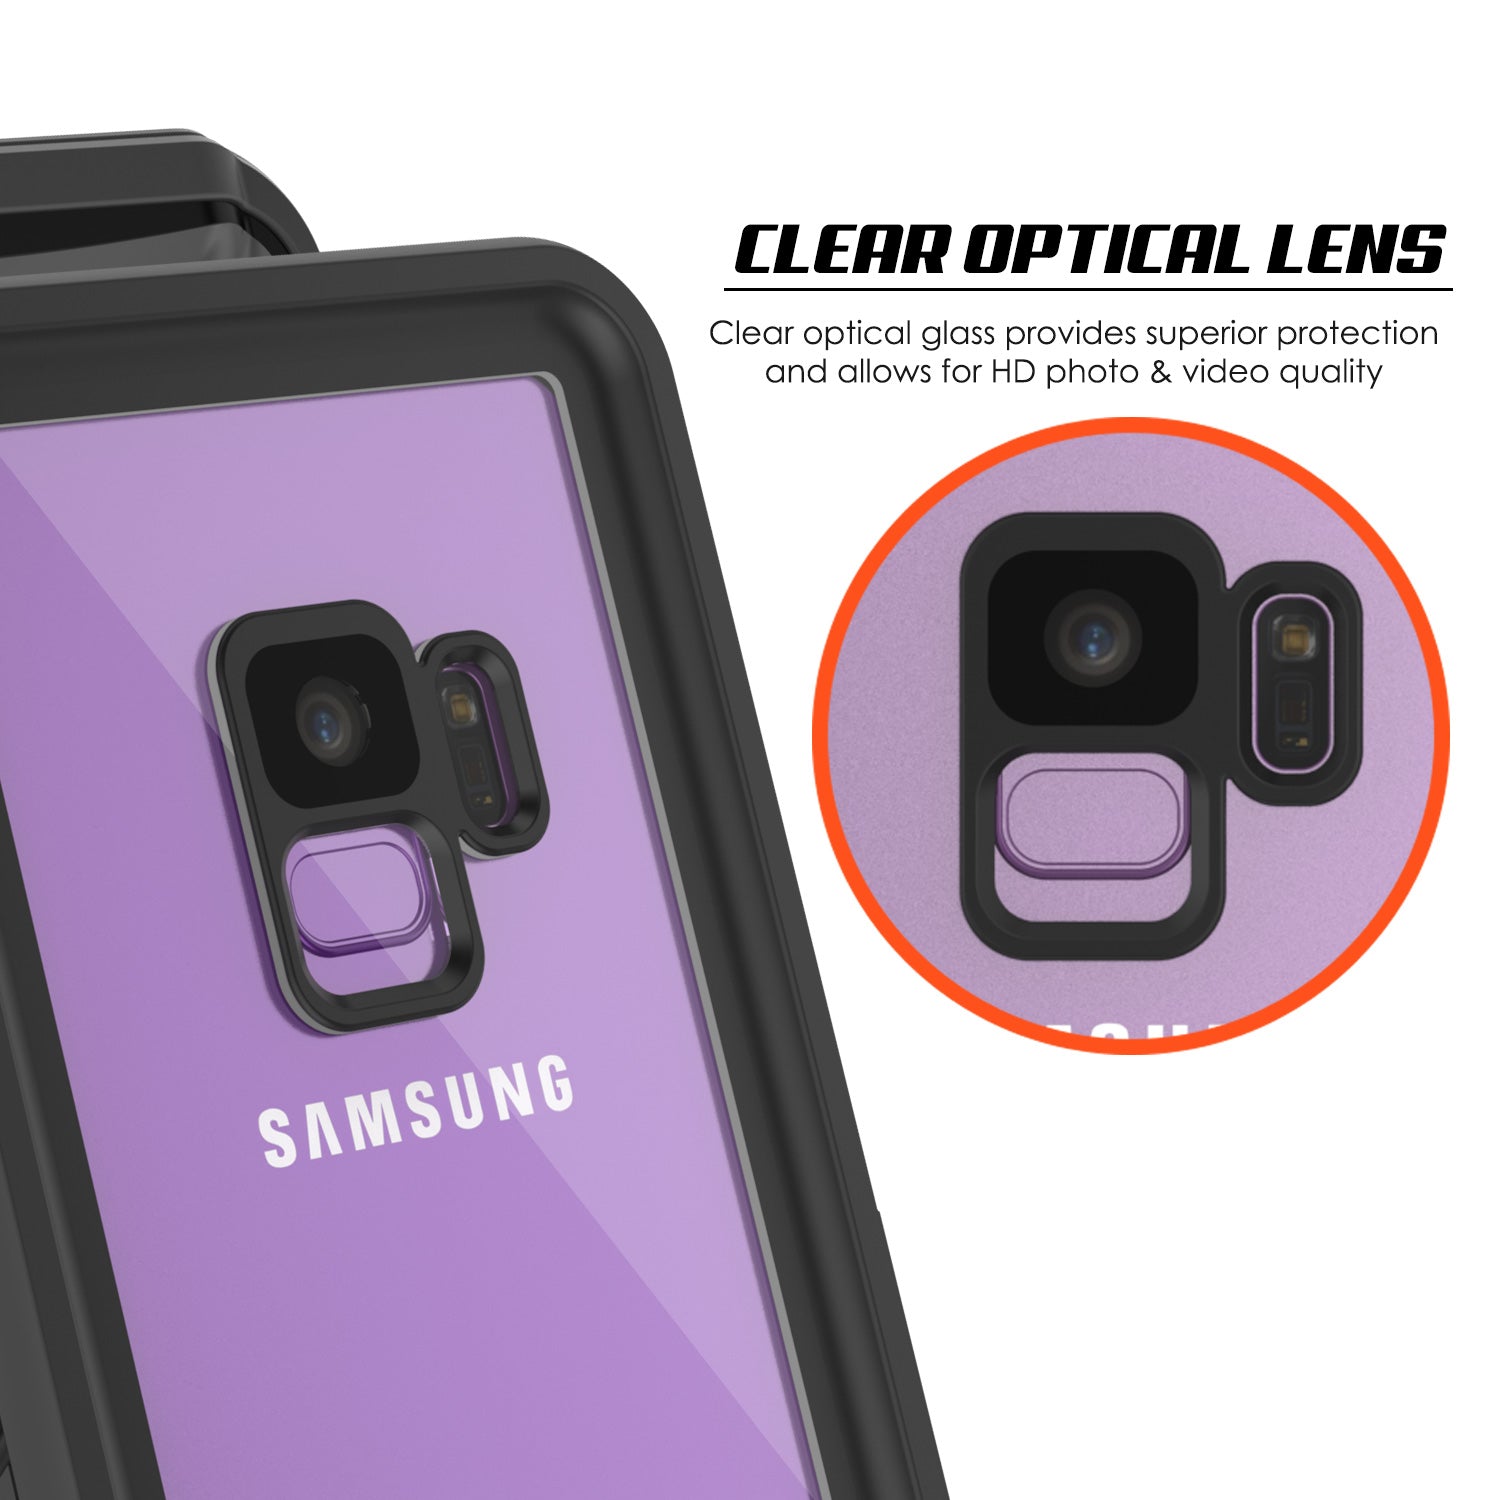 Galaxy S9 Water/Shock Proof Slim Fit Case | PunkCase StudStar [Black]